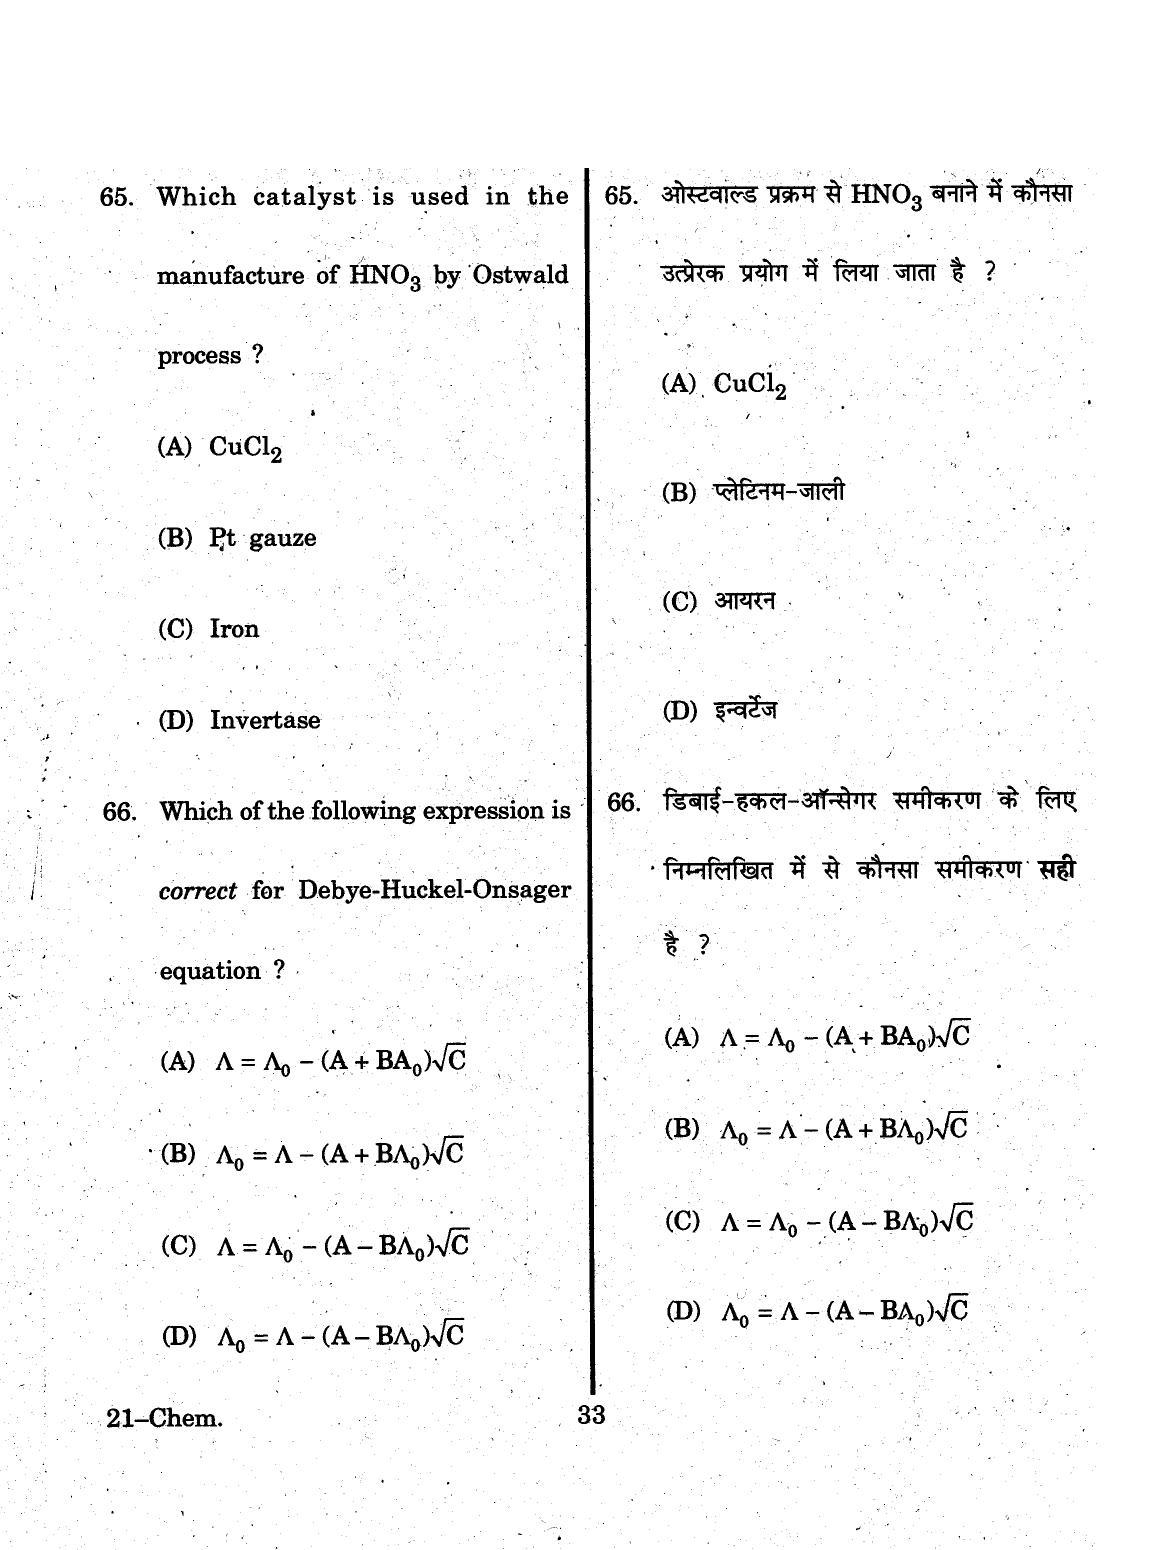 URATPG 2015 Chemisty Question Paper - Page 33